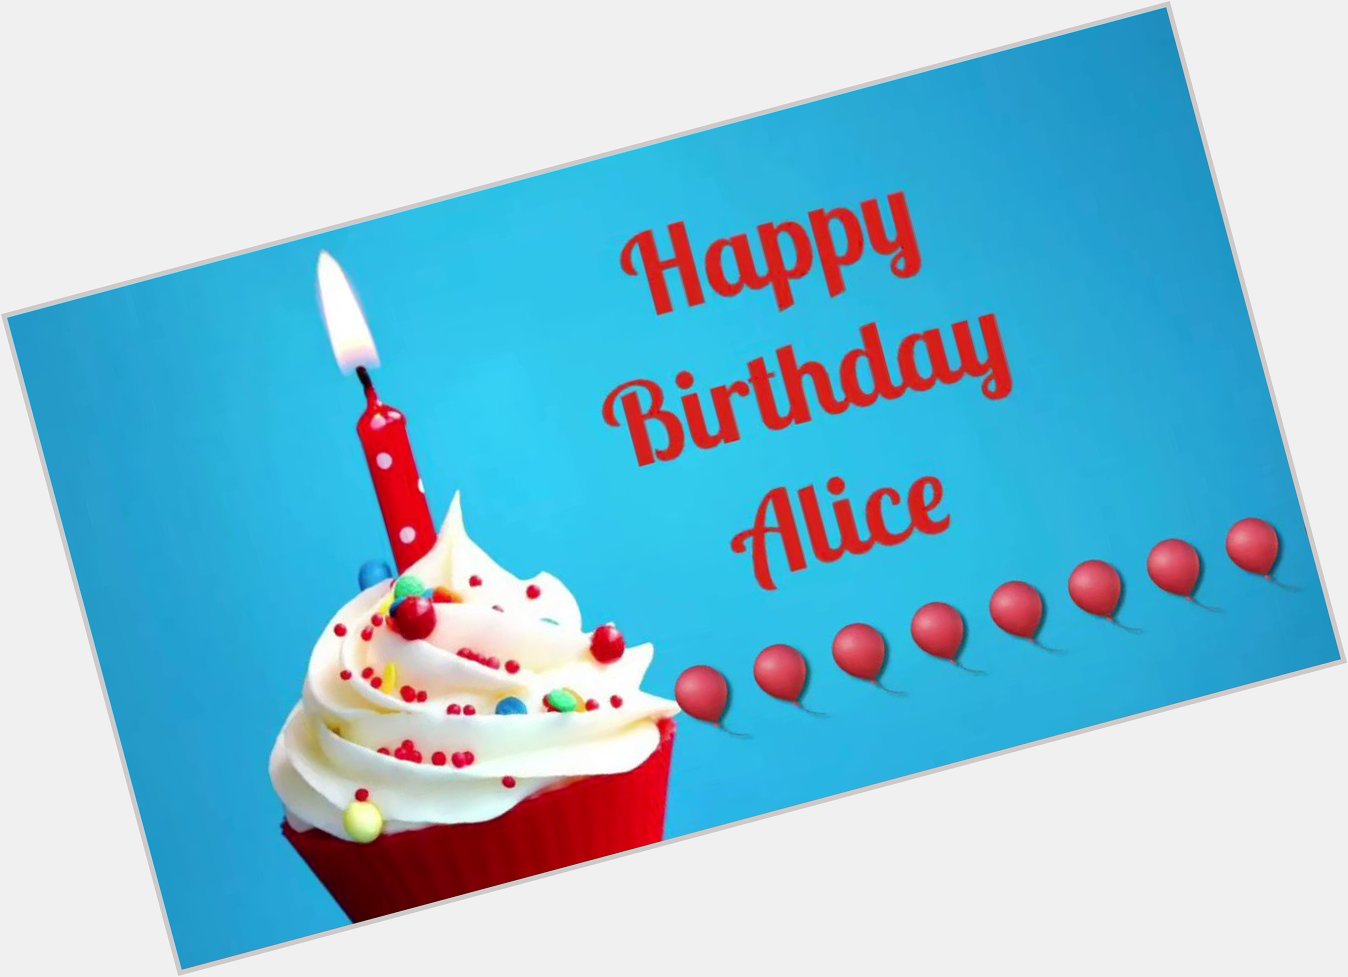 Happy Birthday Dr. Alice Prince! 